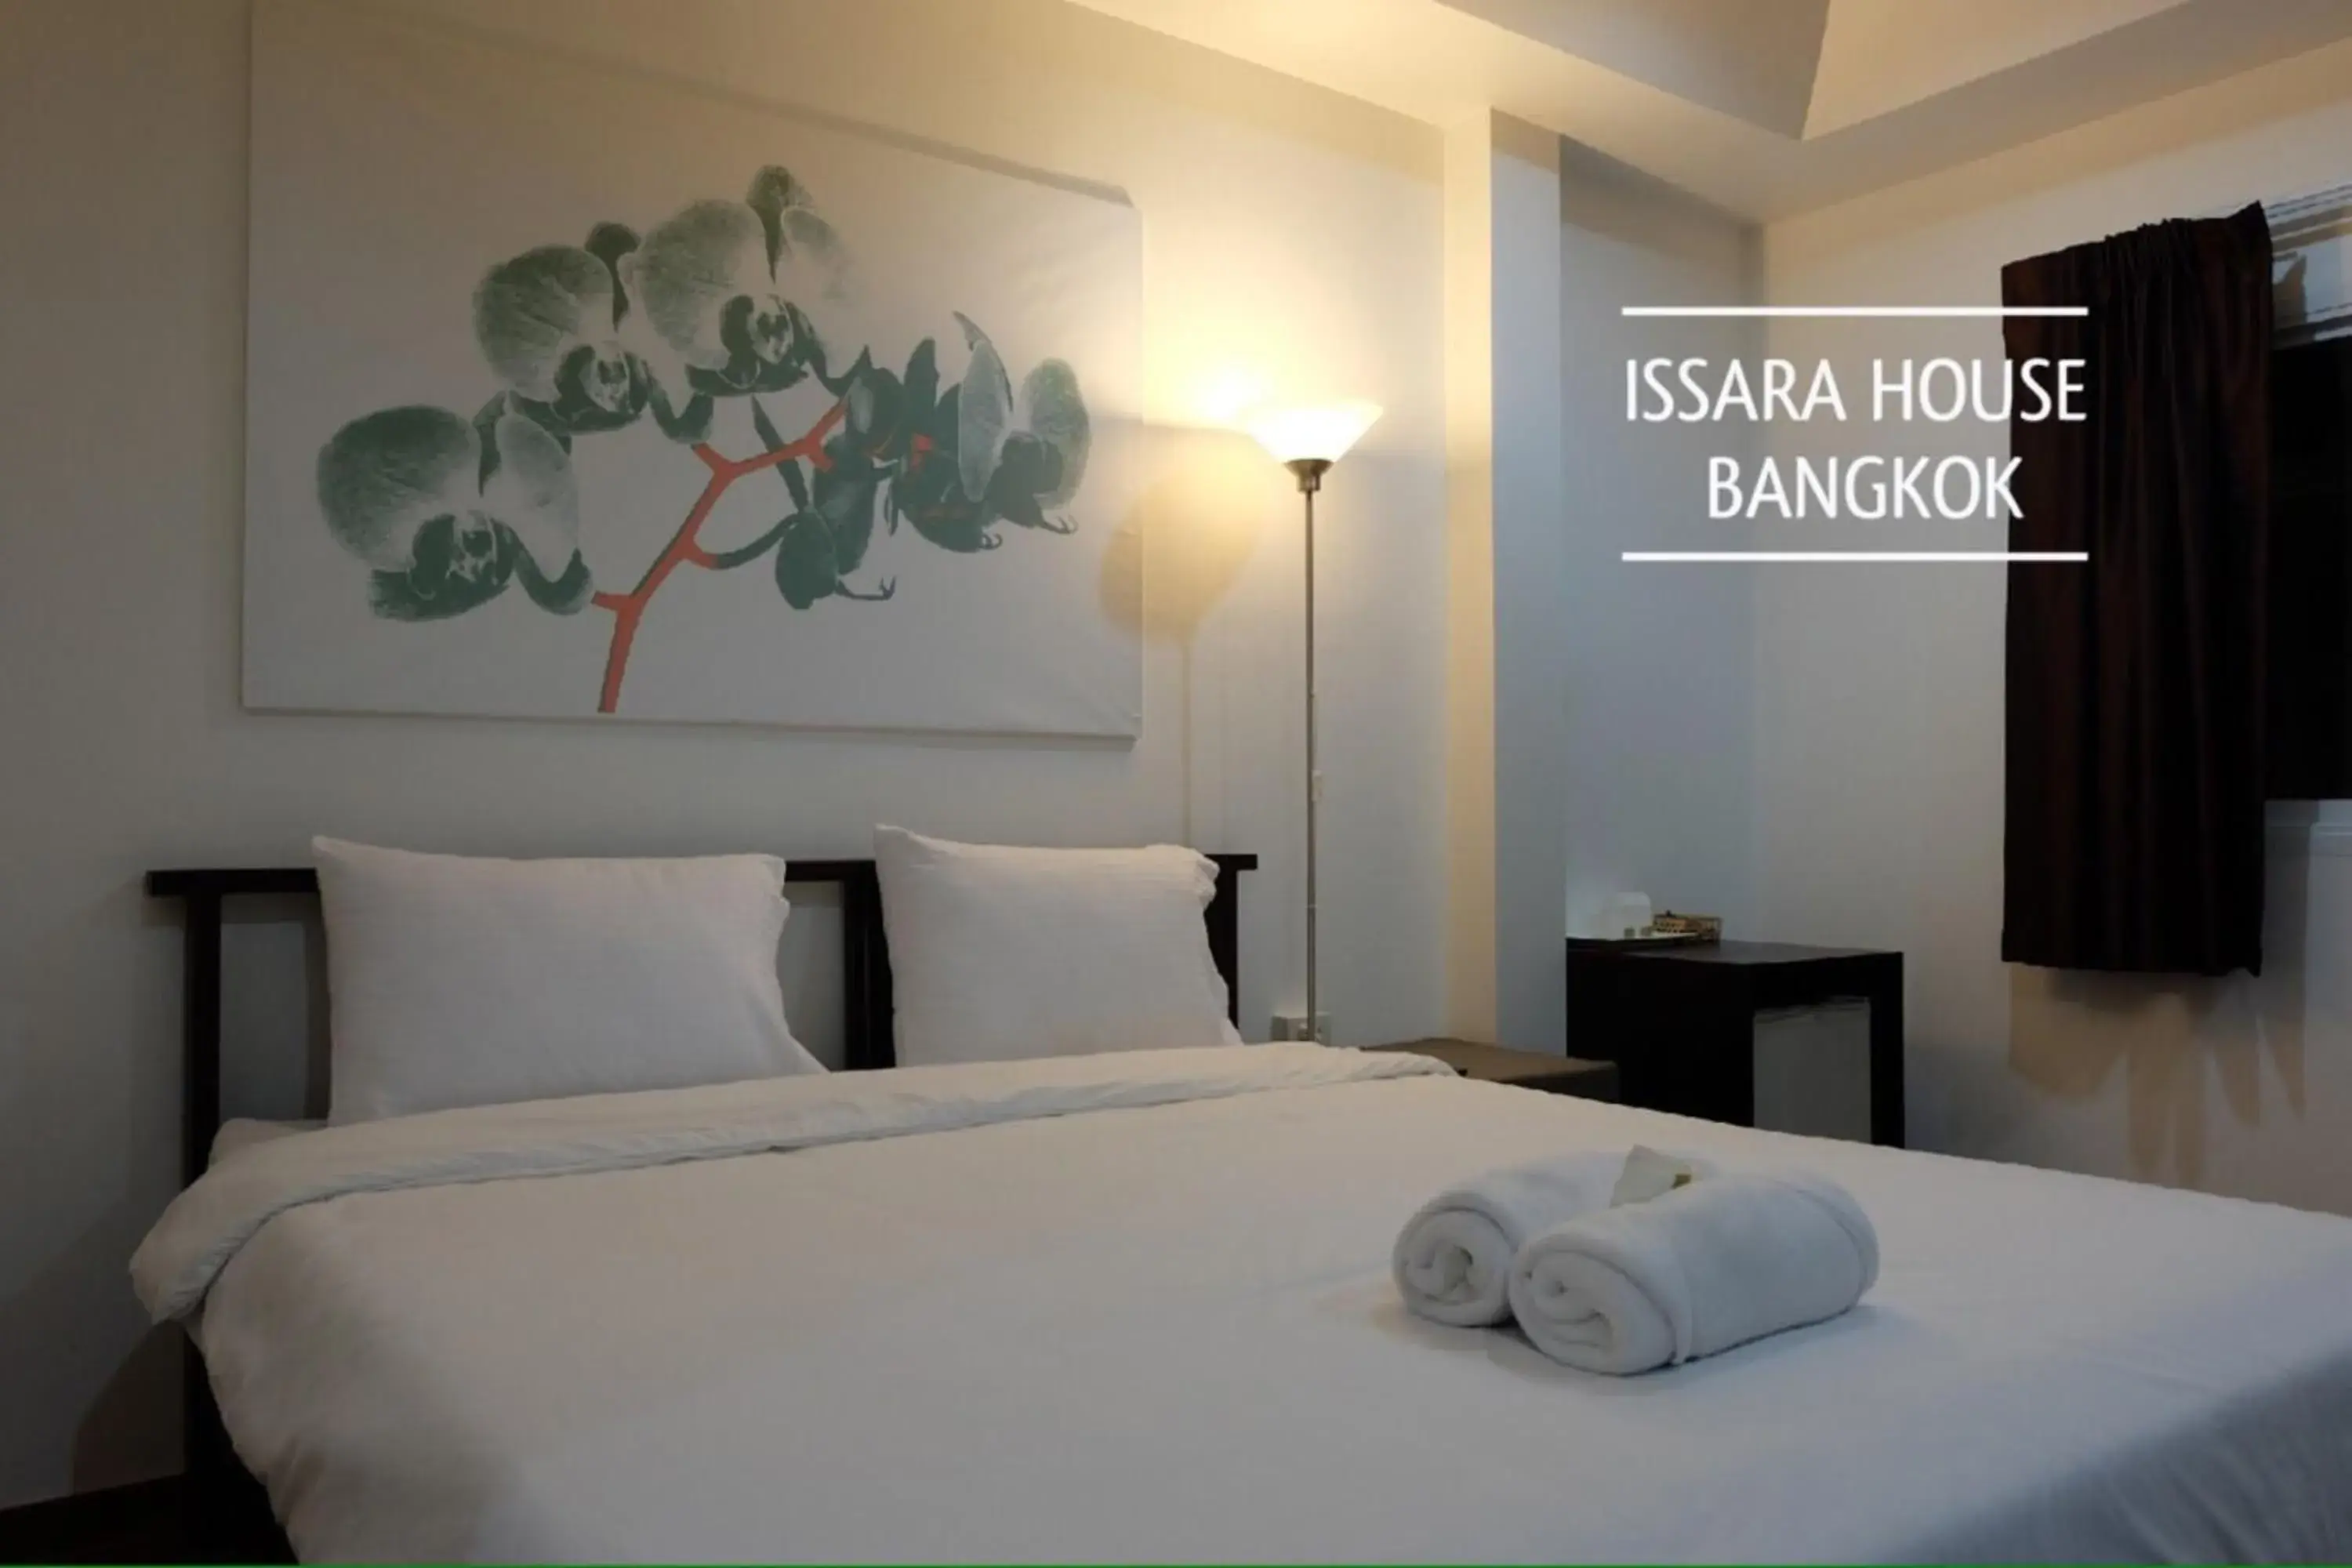 Bedroom in Issara House Bangkok